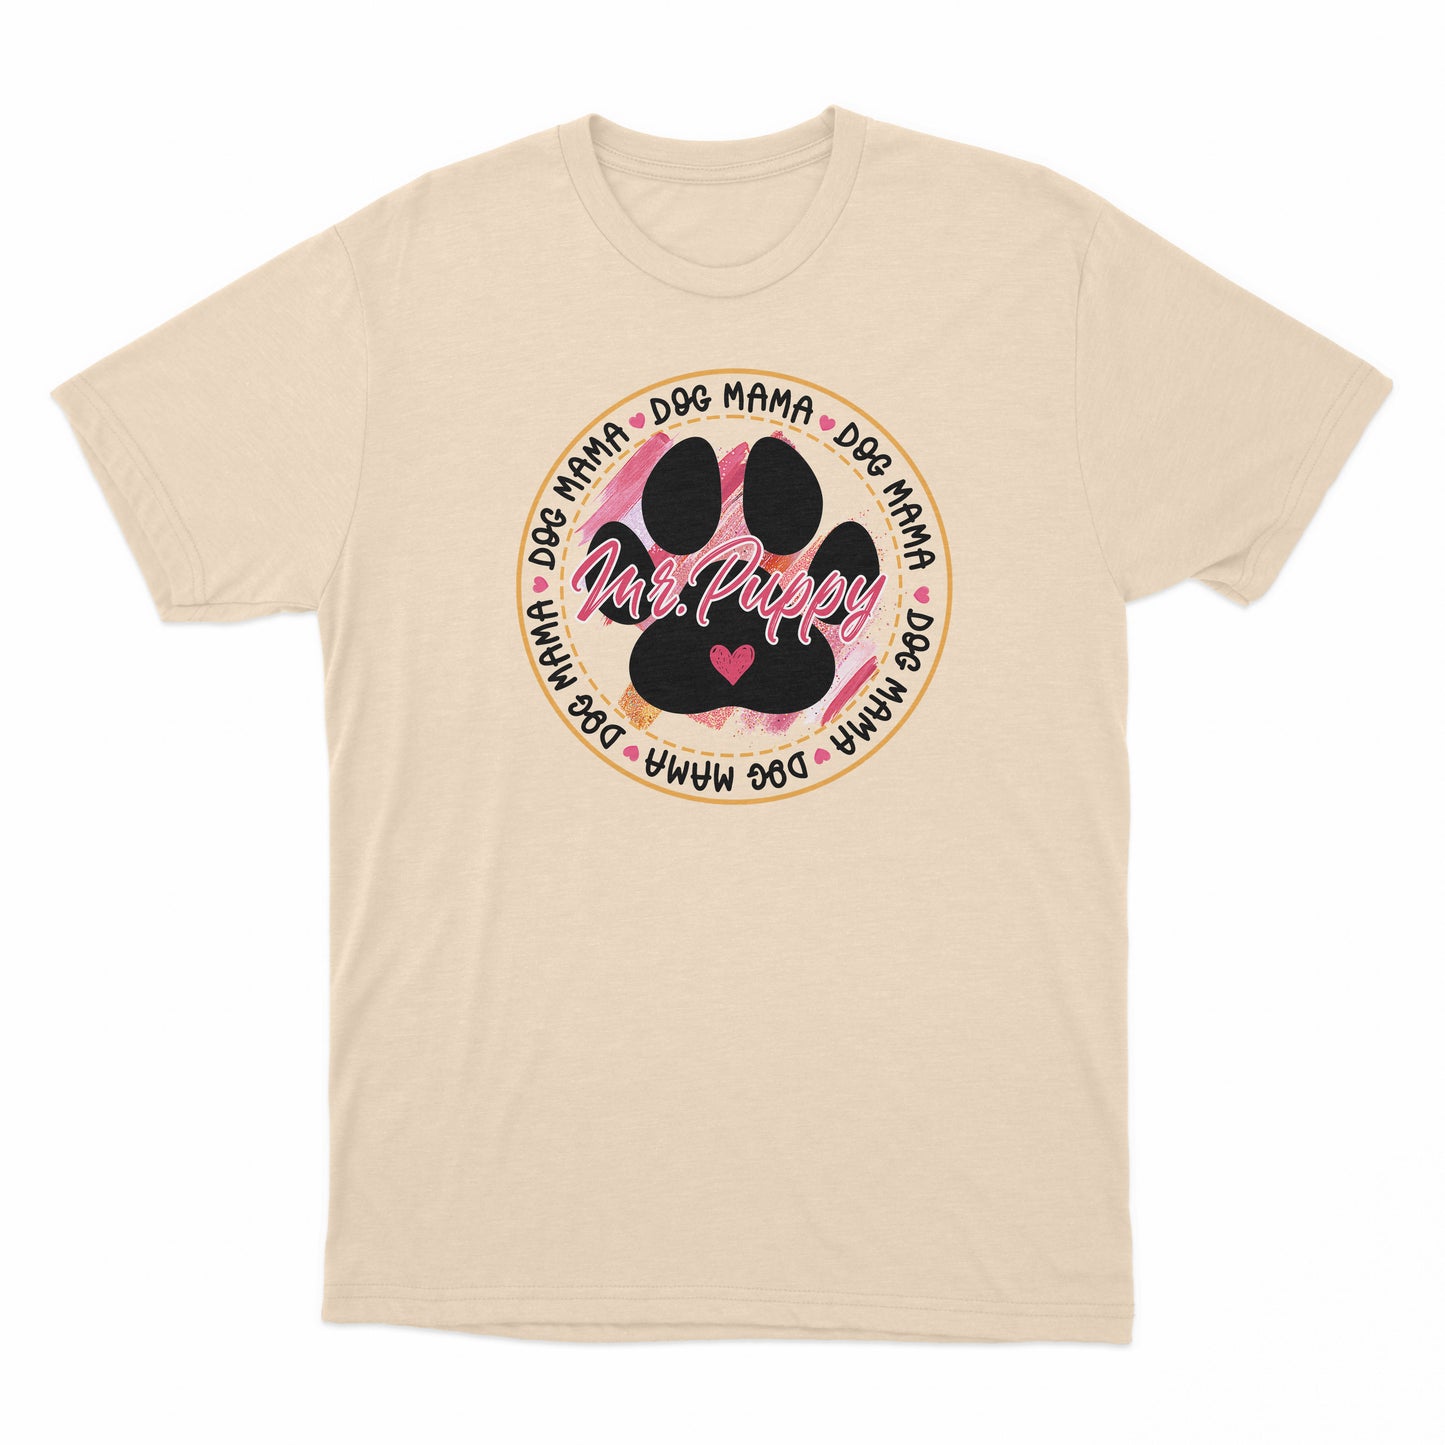 Dog Mom Shirt, Dog Mama Shirt, Cute Dog Paw Shirt, Personalized Dog's Name Shirt, Dog Mom Shirt For Mother's Day, Pet Mom Custom Name Shirt, Colorful Glitter Shirt, Custom Your Dog's Name Shirt, Dog Mom Gift Idea Shirt, Shirt For Who Loves Dog (Ver 1)